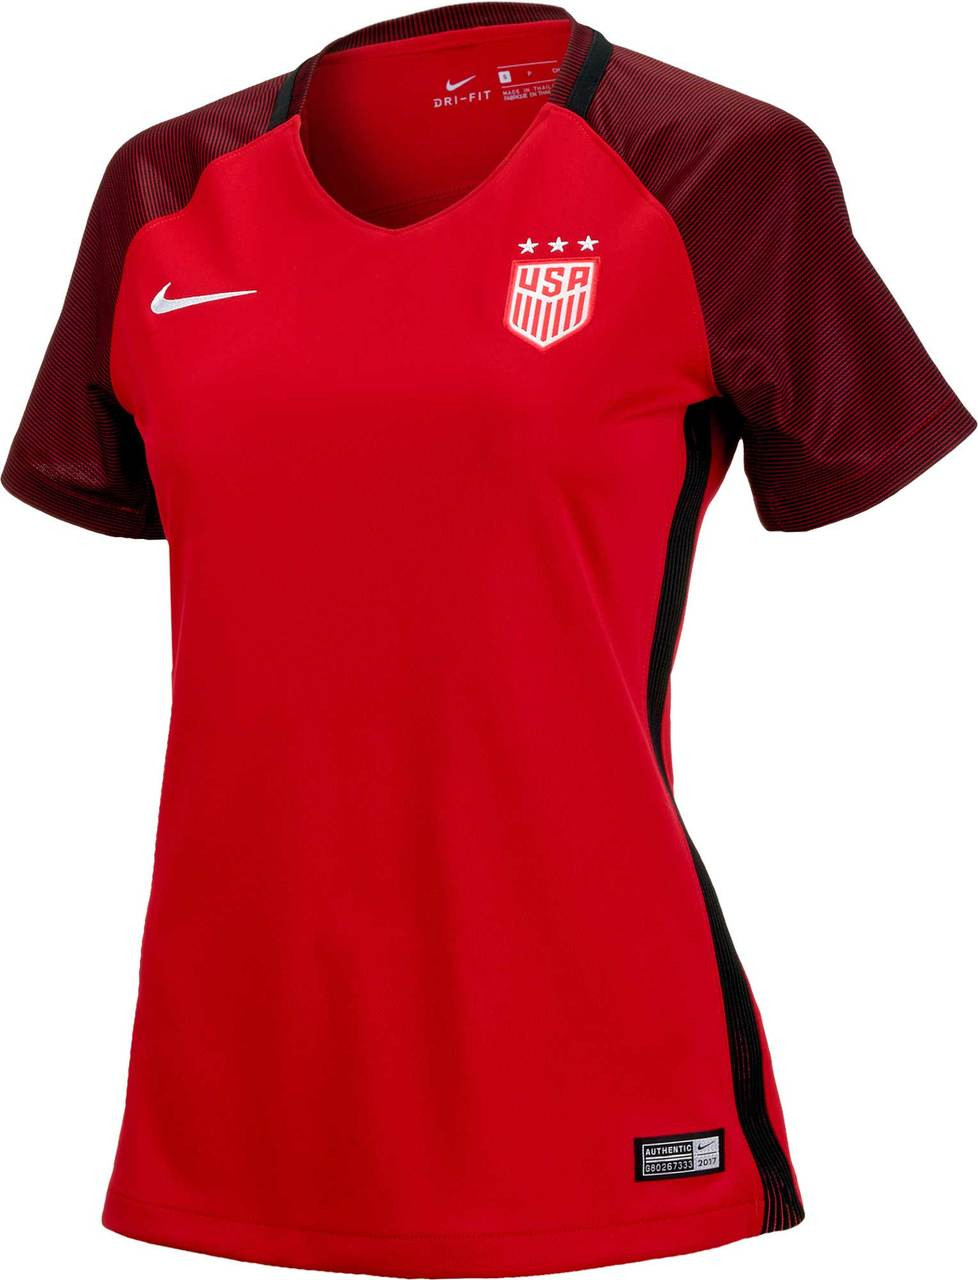 usa women's red soccer jersey